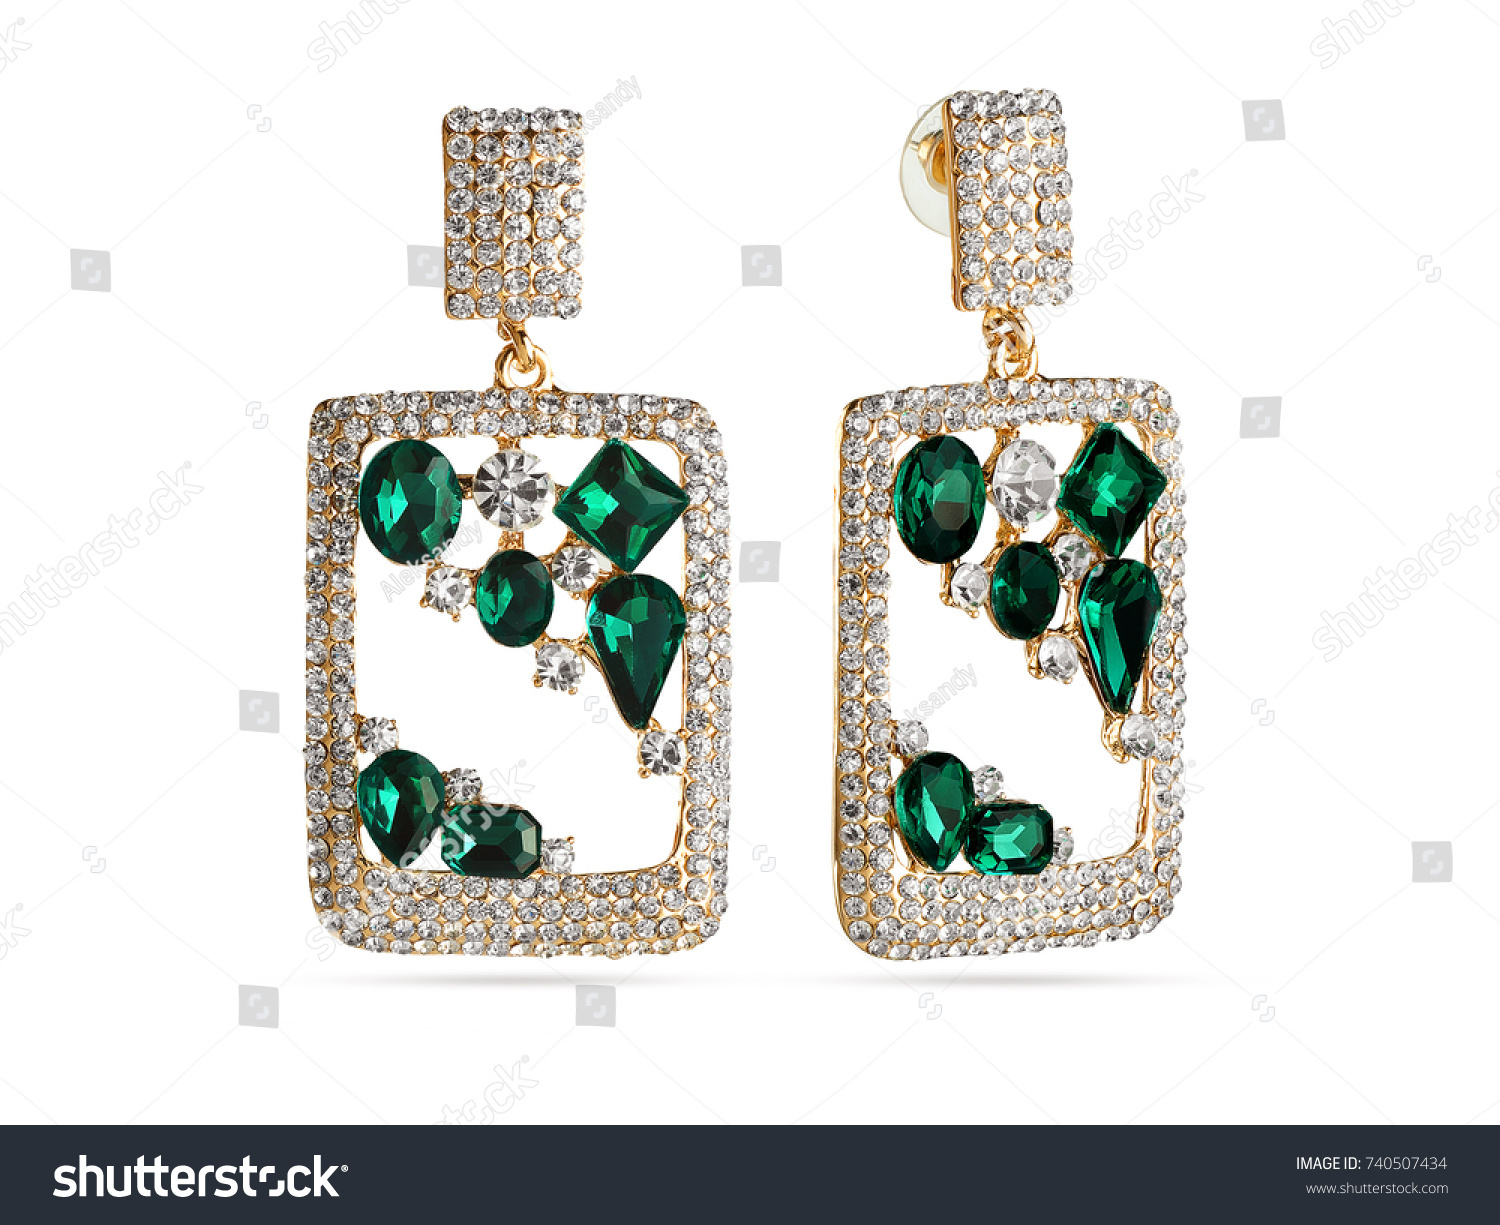 Glamour earrings #740507434